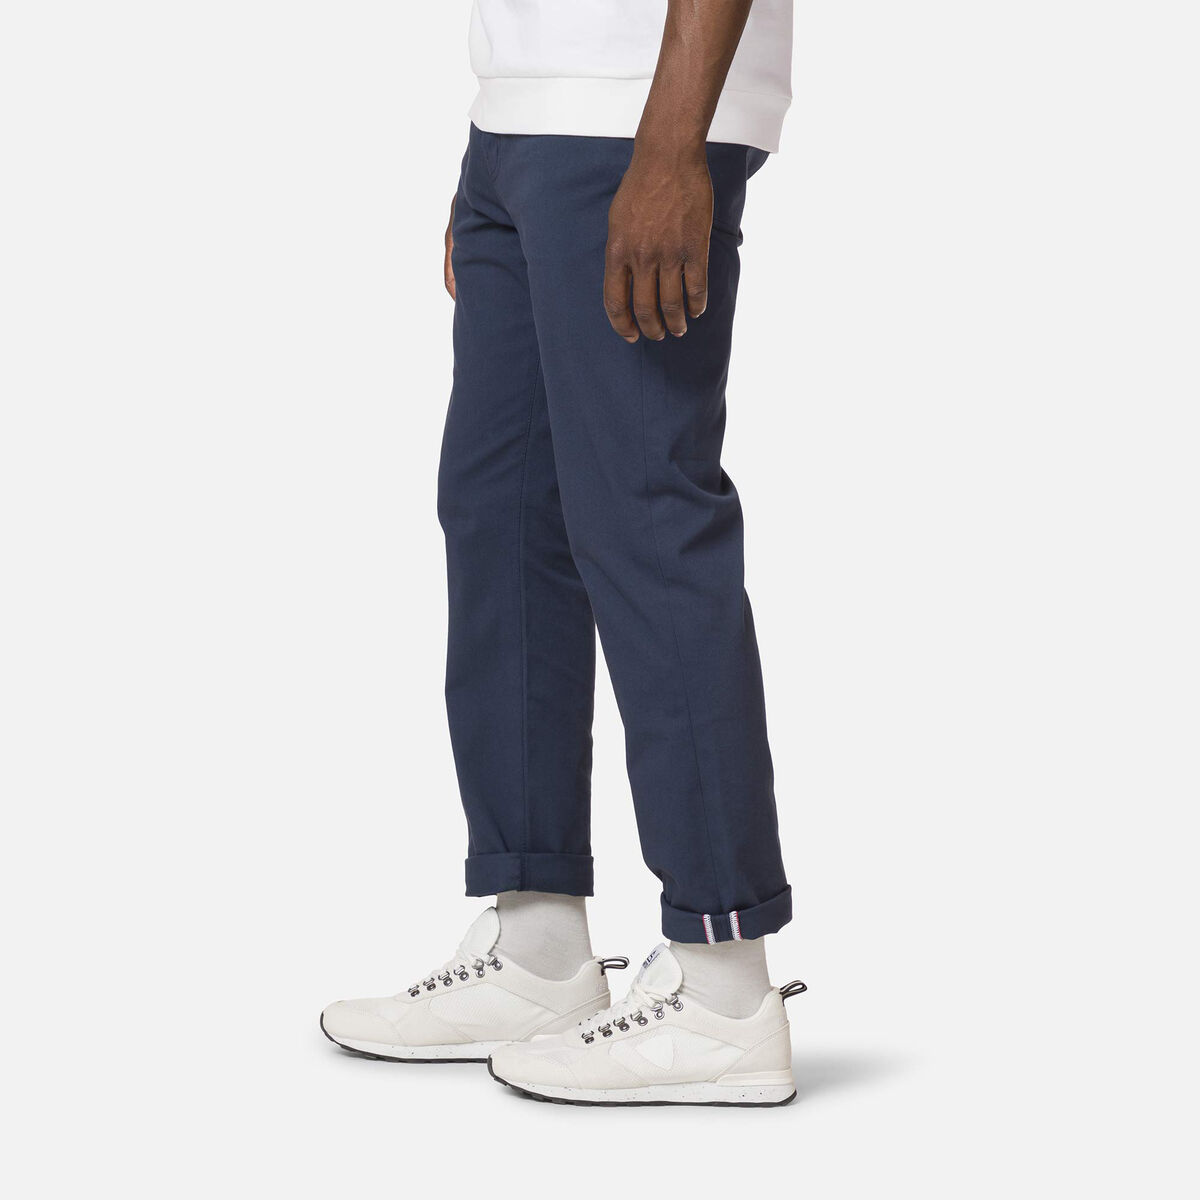 Men's organic cotton pants